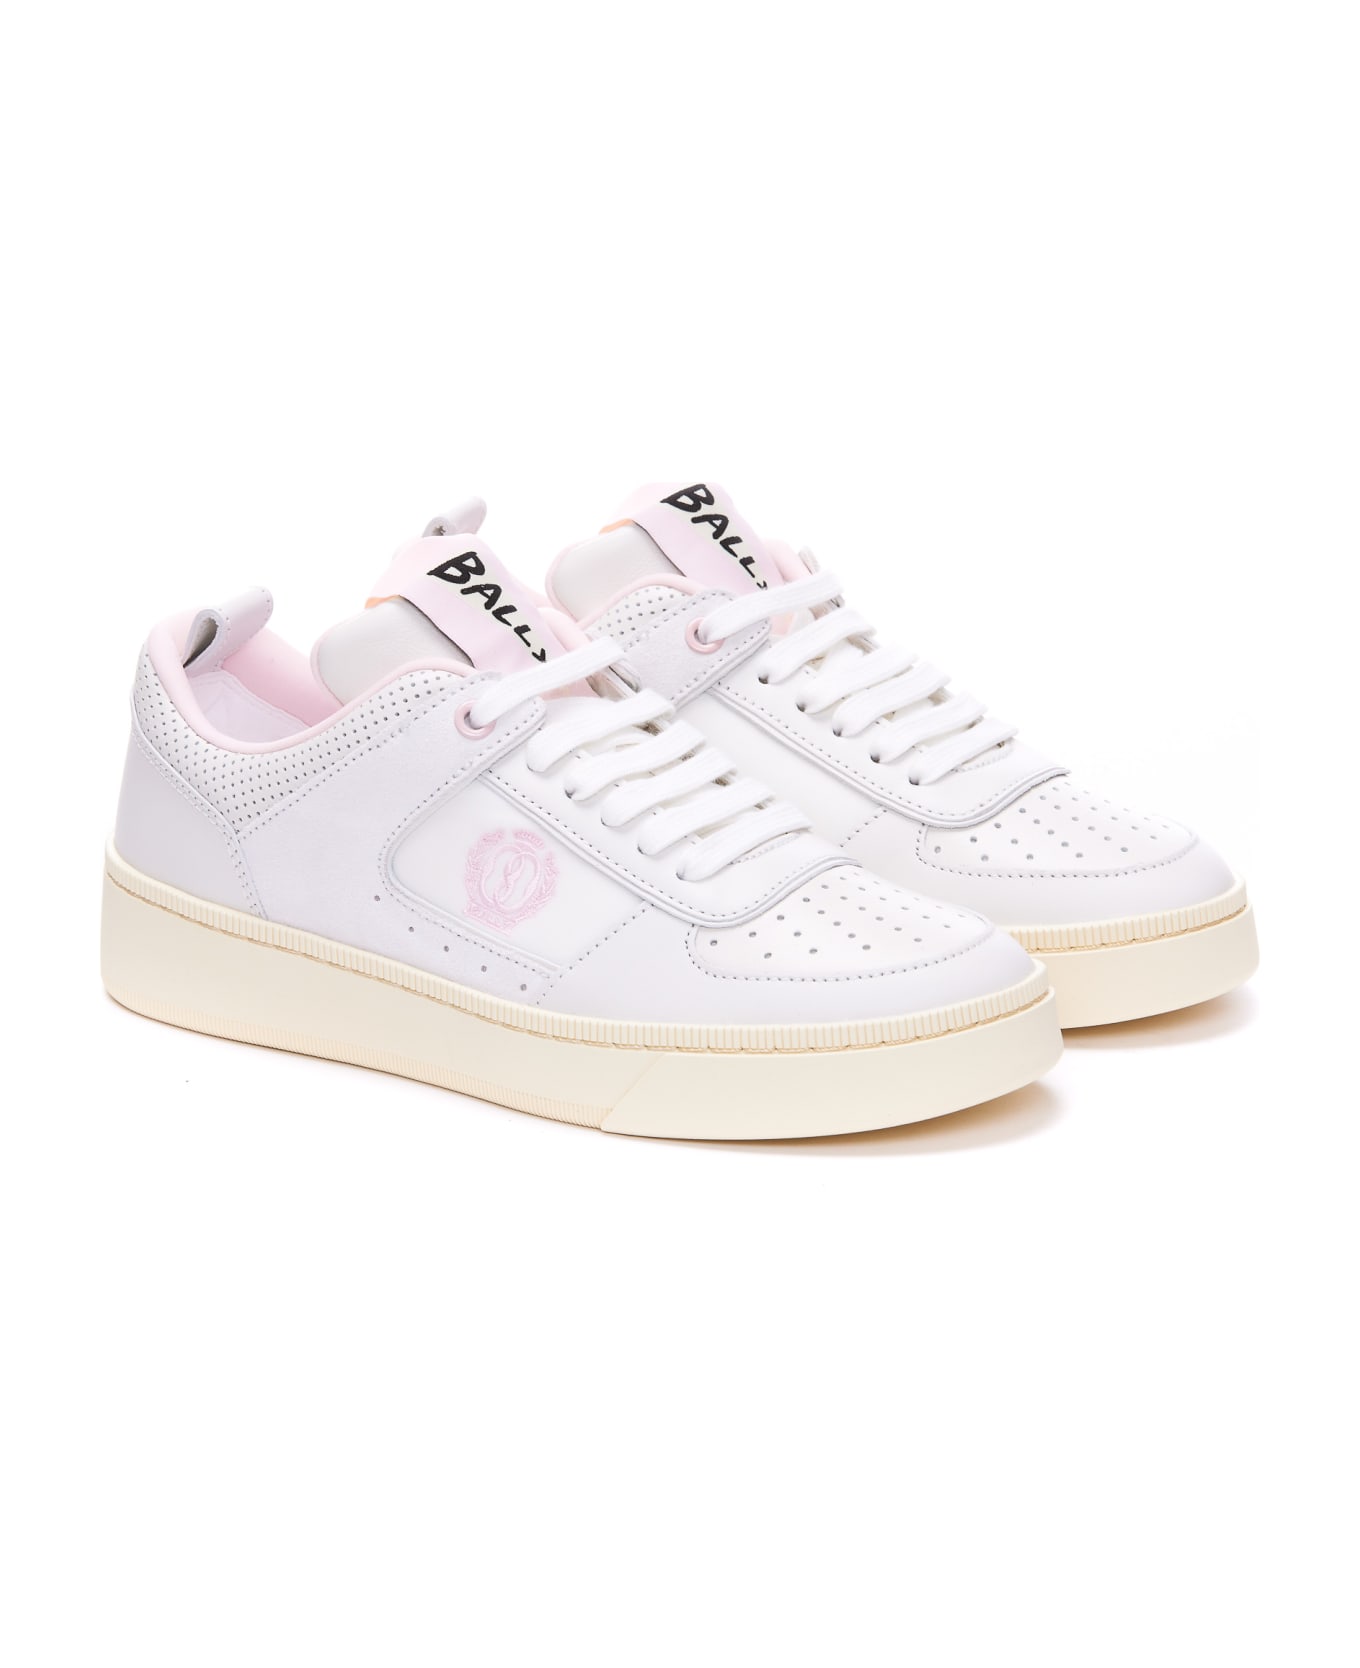 Bally Riweira Sneakers - White/rosa50